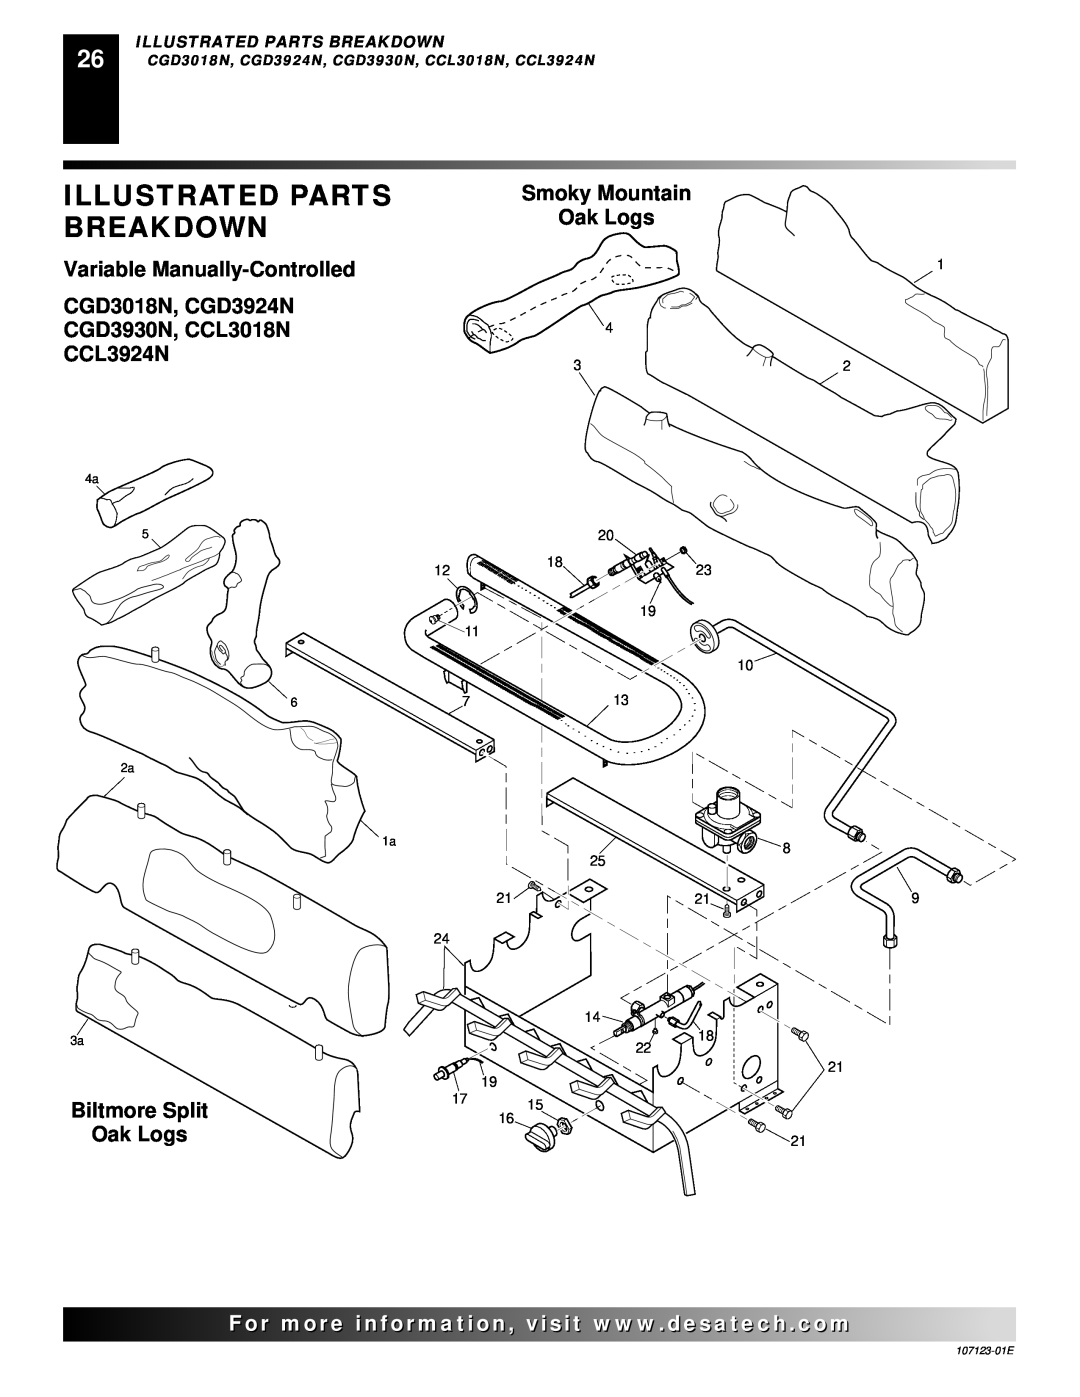 Desa CGD3018NT Illustrated Parts, Breakdown, Smoky Mountain, Oak Logs, Variable Manually-Controlled, CGD3018N, CGD3924N 